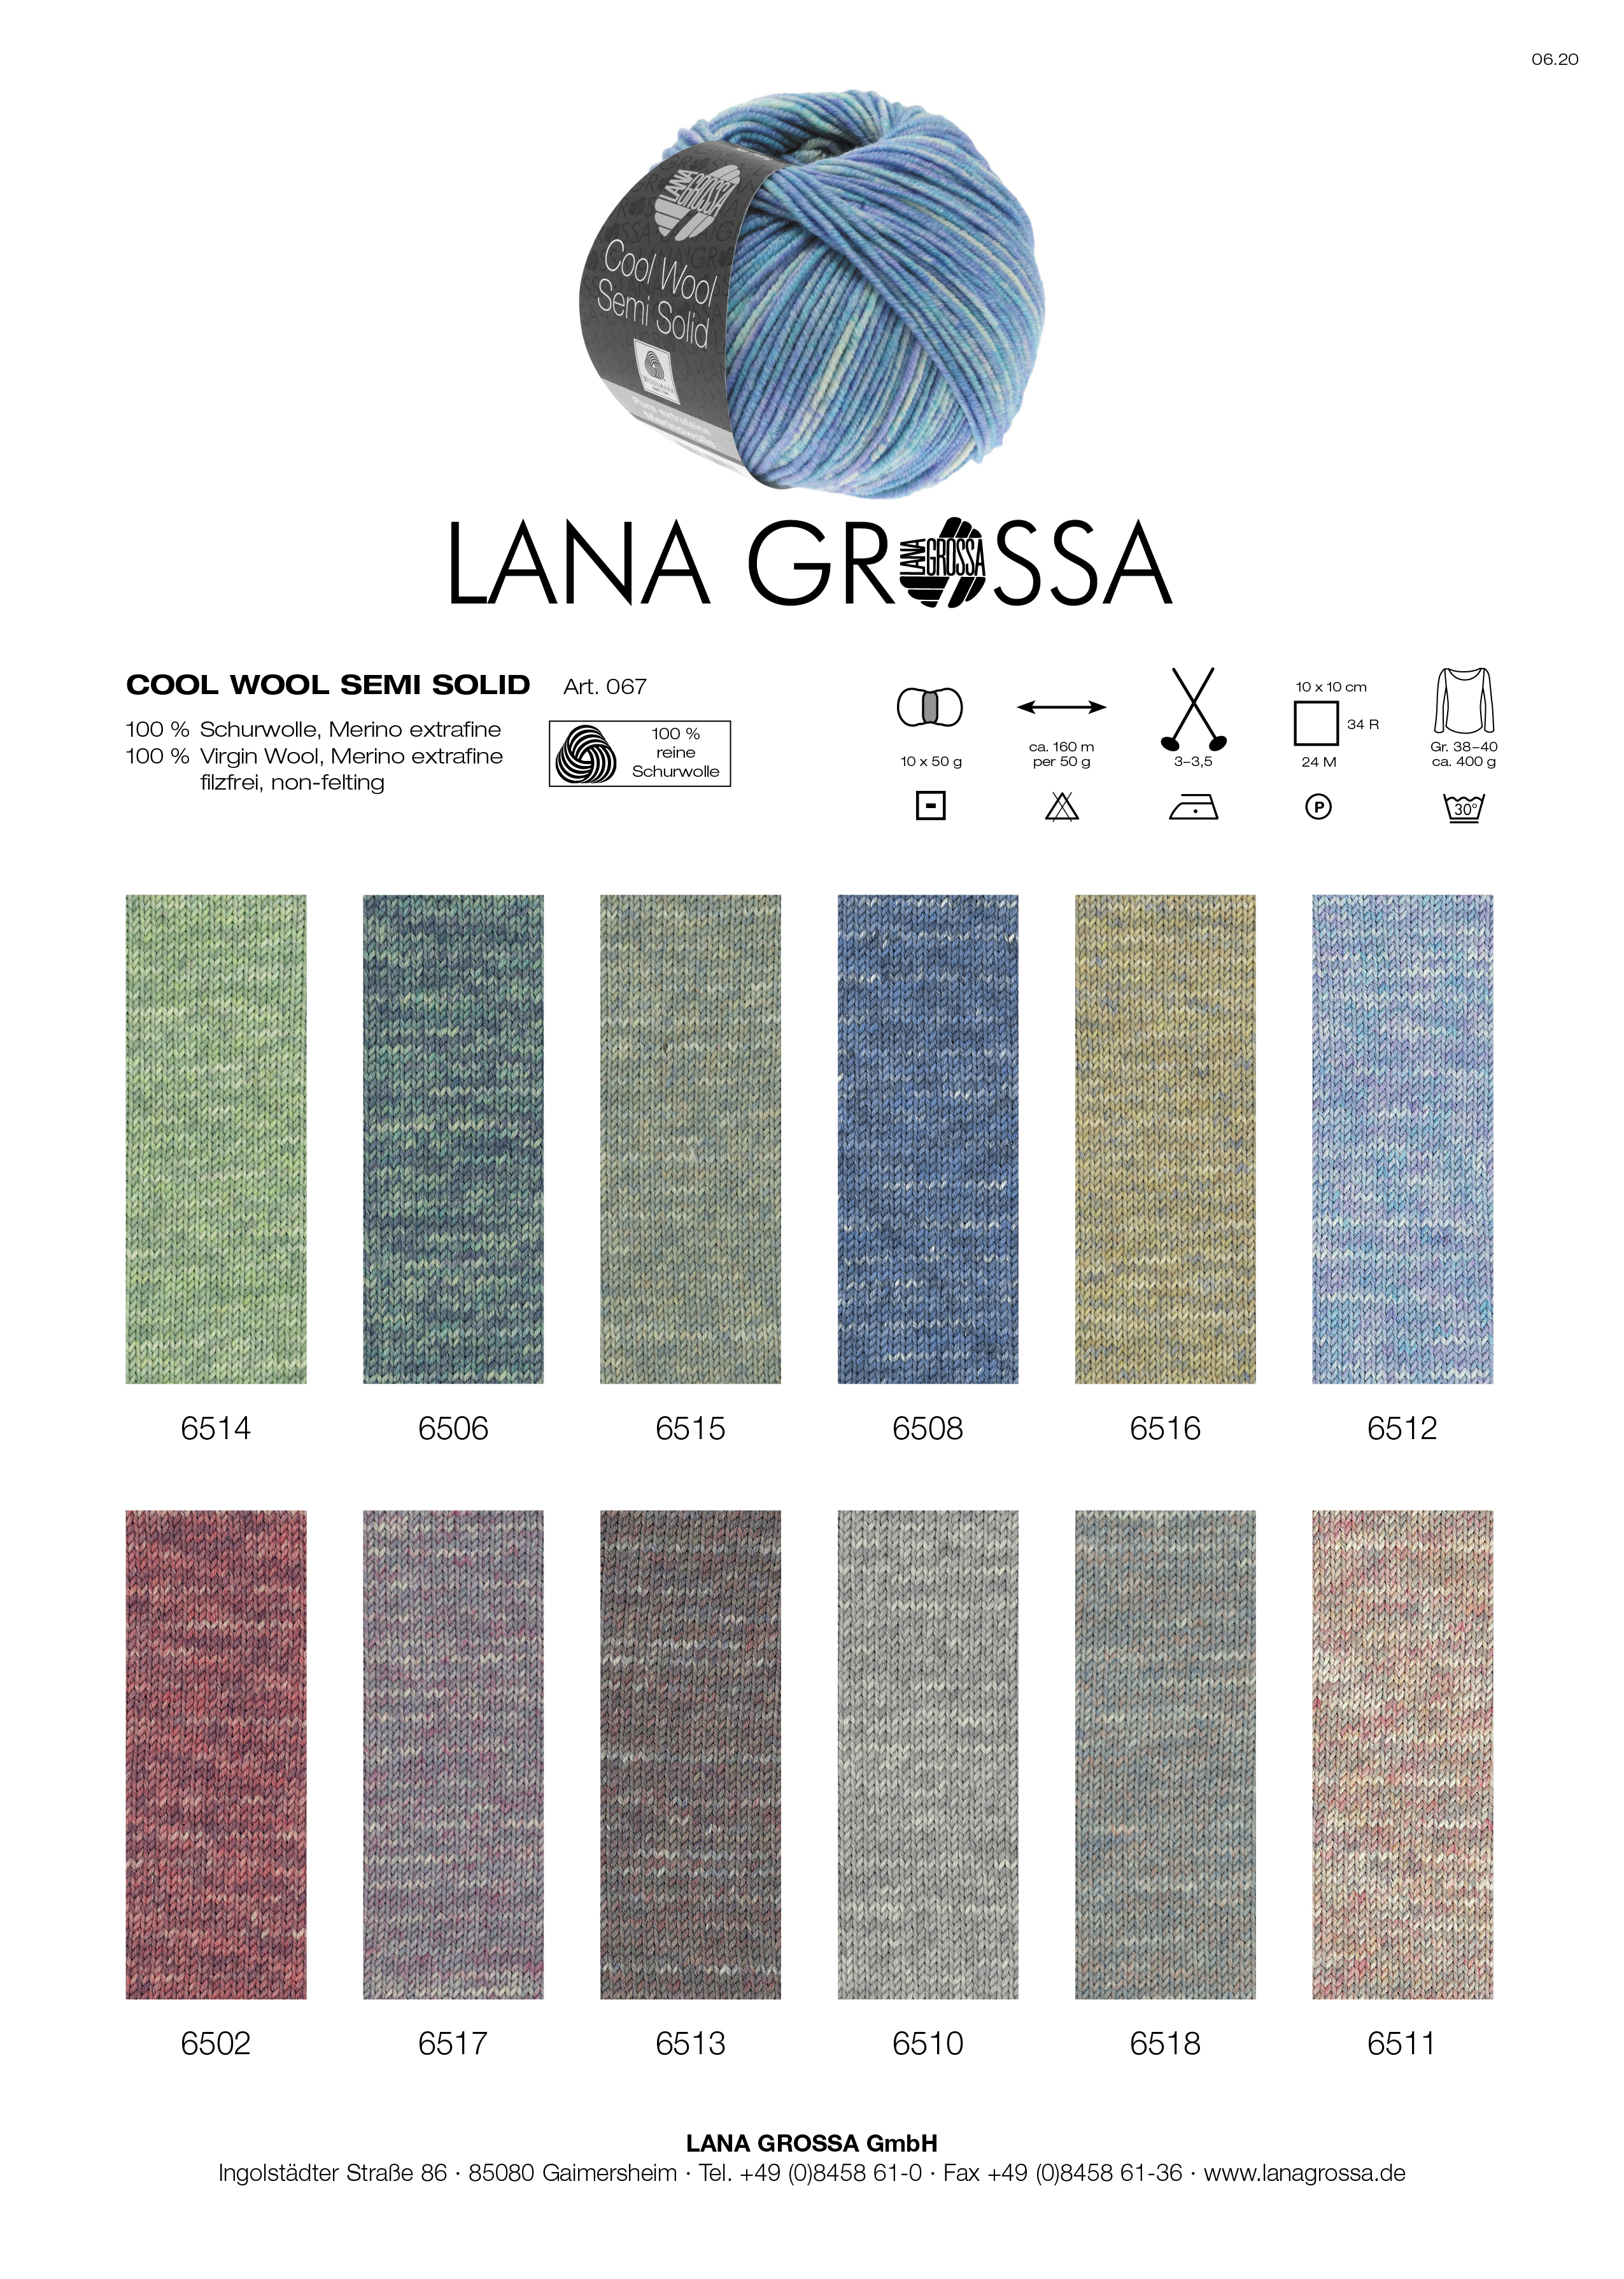 LANA GROSSA Cool Wool Semi Solid Farbe 6511 Rosa/Graulila/Ecru meliert 